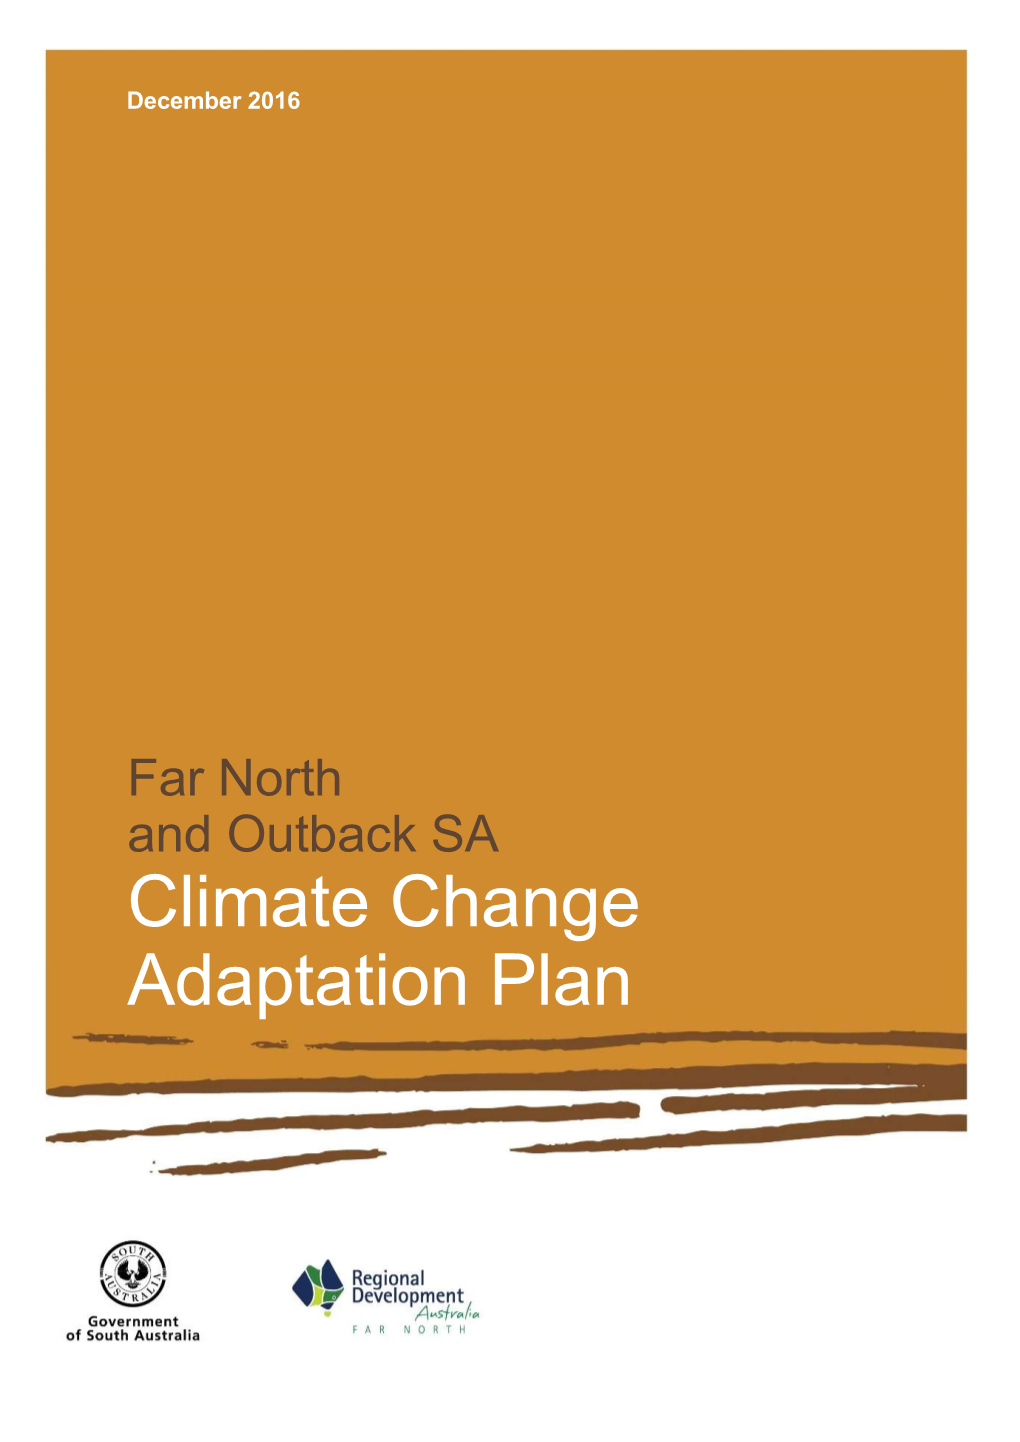 Far North and Outback SA Climate Change Adaptation Plan